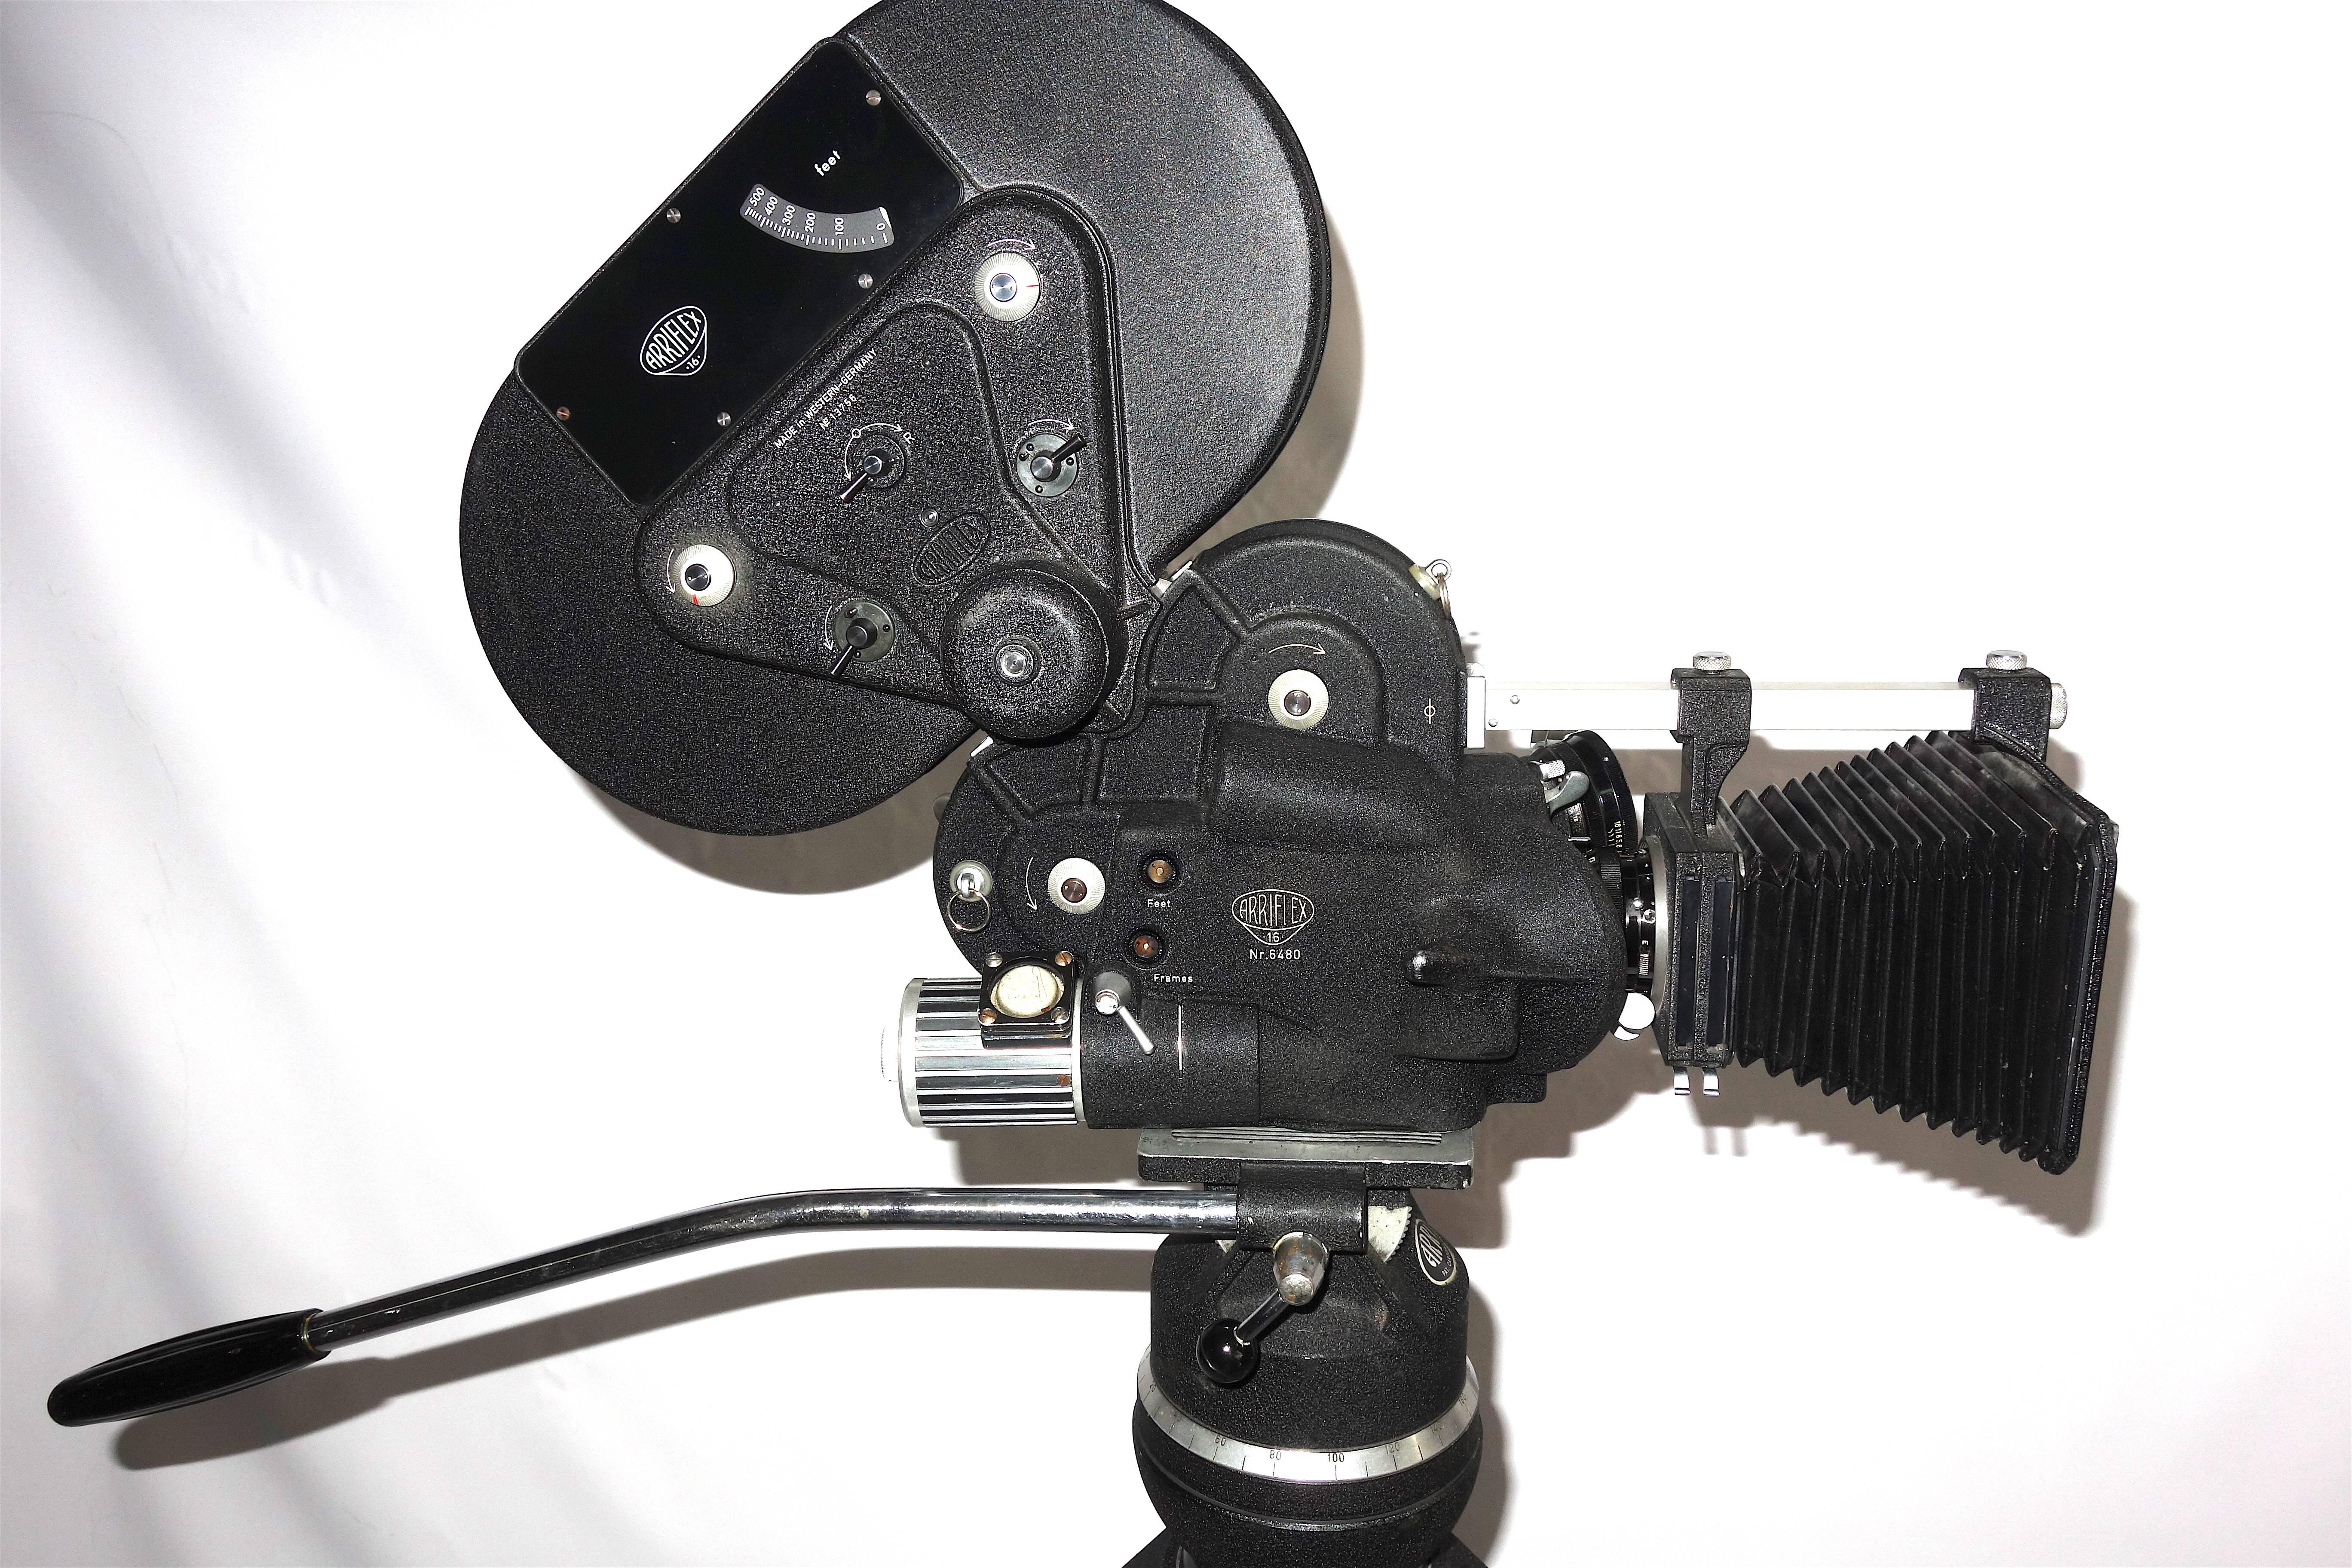 arriflex 16mm camera